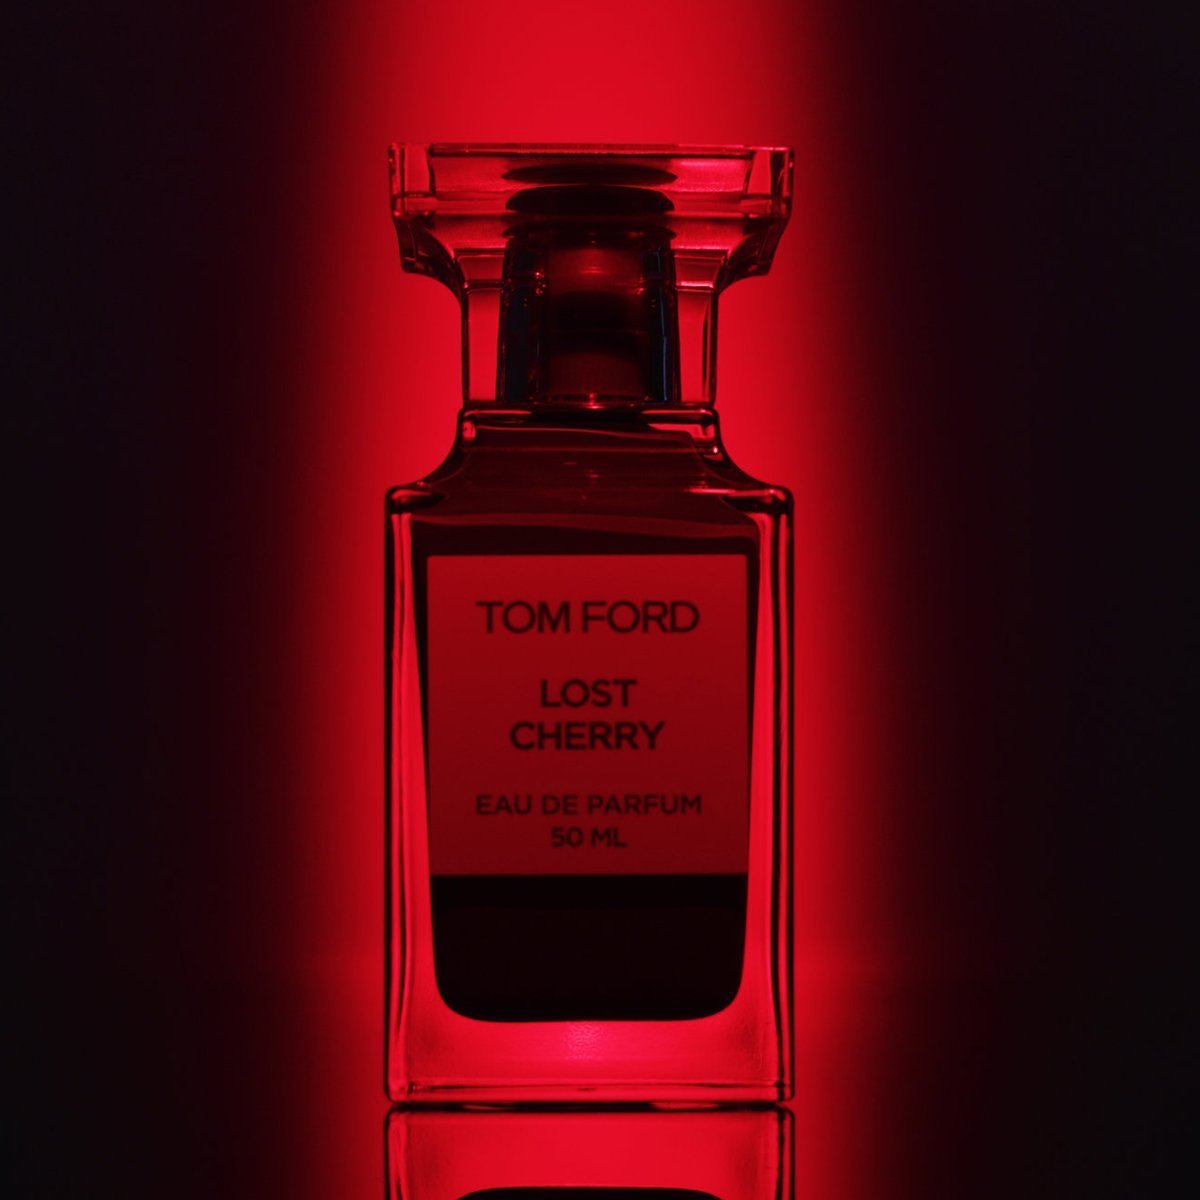 TOM FORD Lost Cherry Gift Set - My Perfume Shop Australia